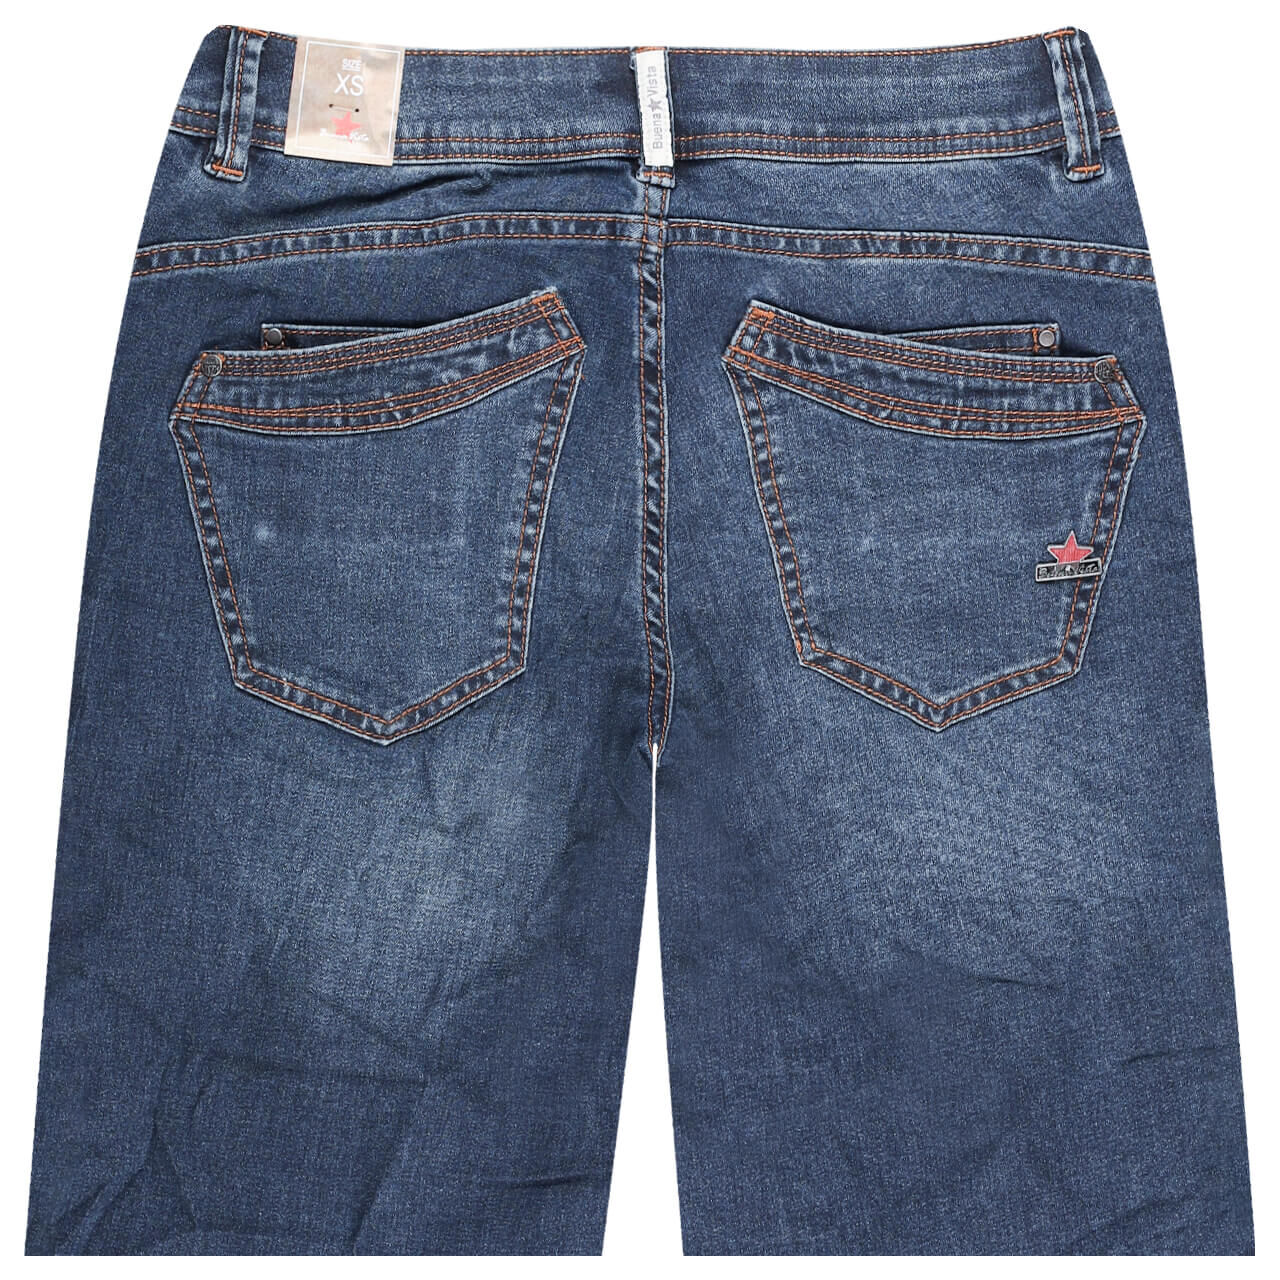 Buena Vista Malibu-Short Stretch Denim Jeans dark stone